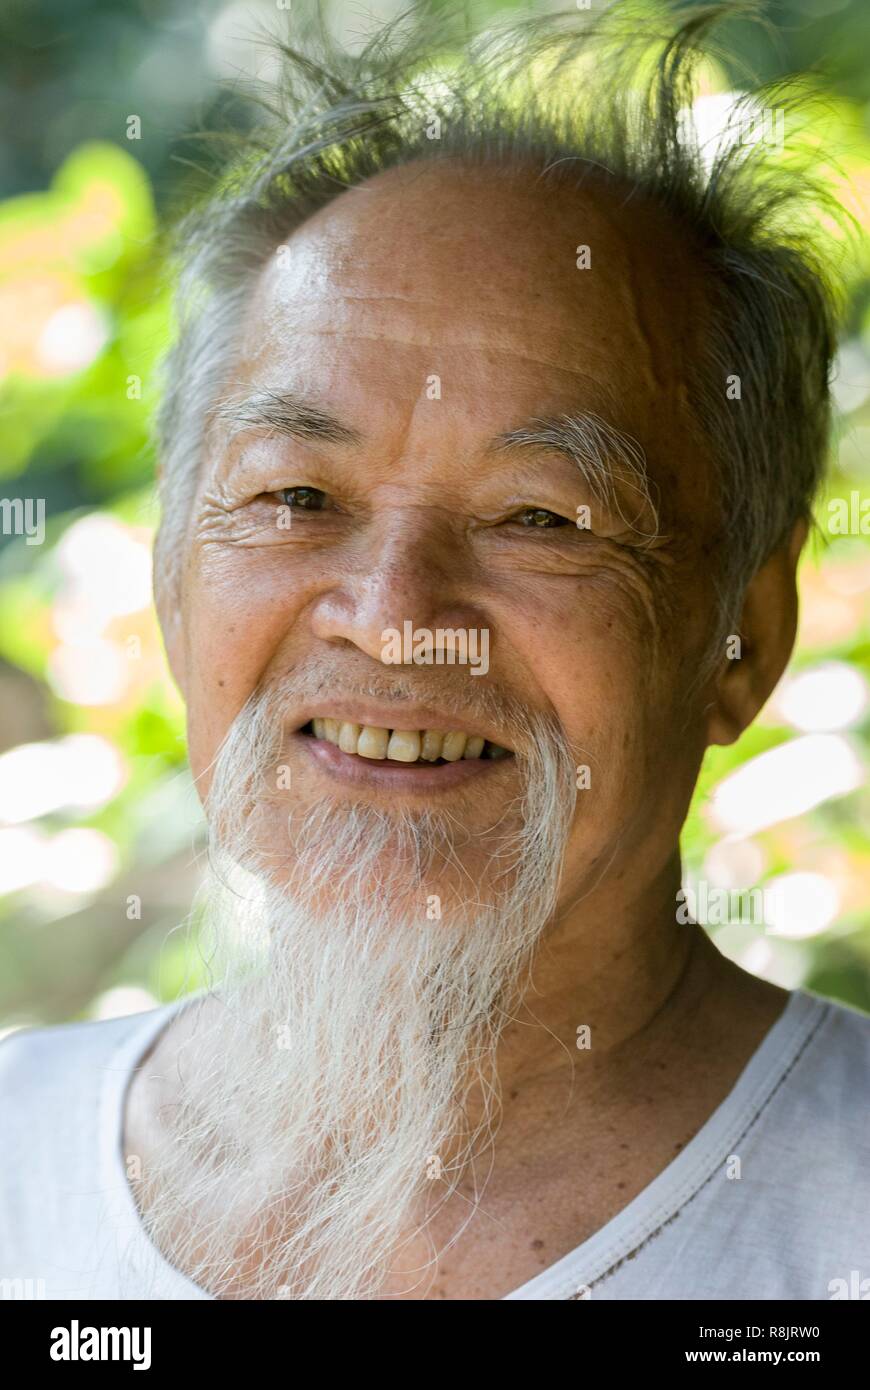 Vietnam, Vinh Long Province, Mekong Delta Region, Vinh Long, portrait of man Stock Photo